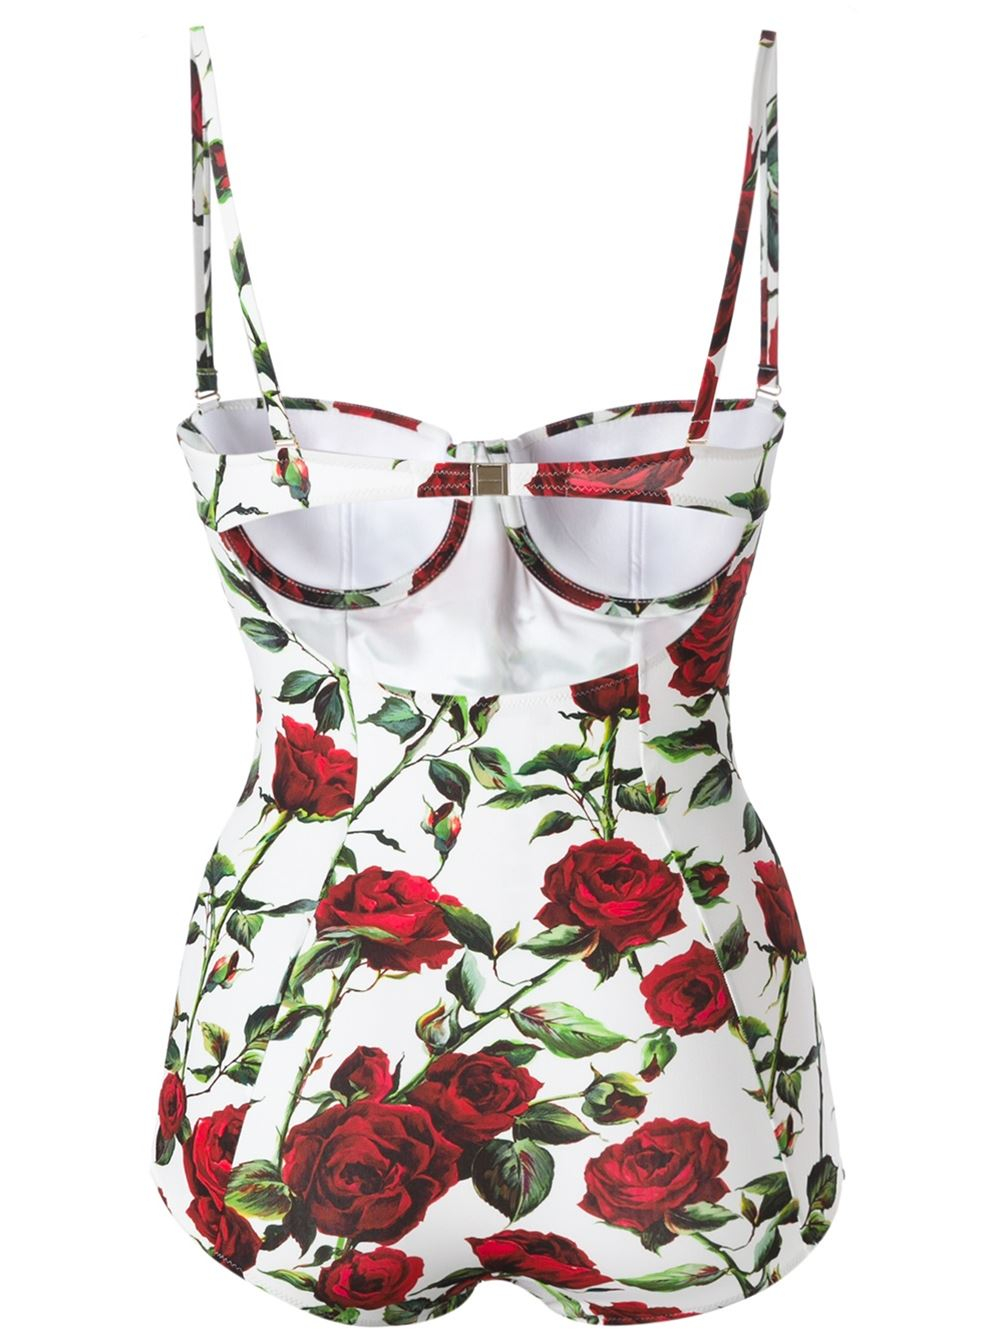 Lyst - Dolce & Gabbana Rose Print Swimsuit in White